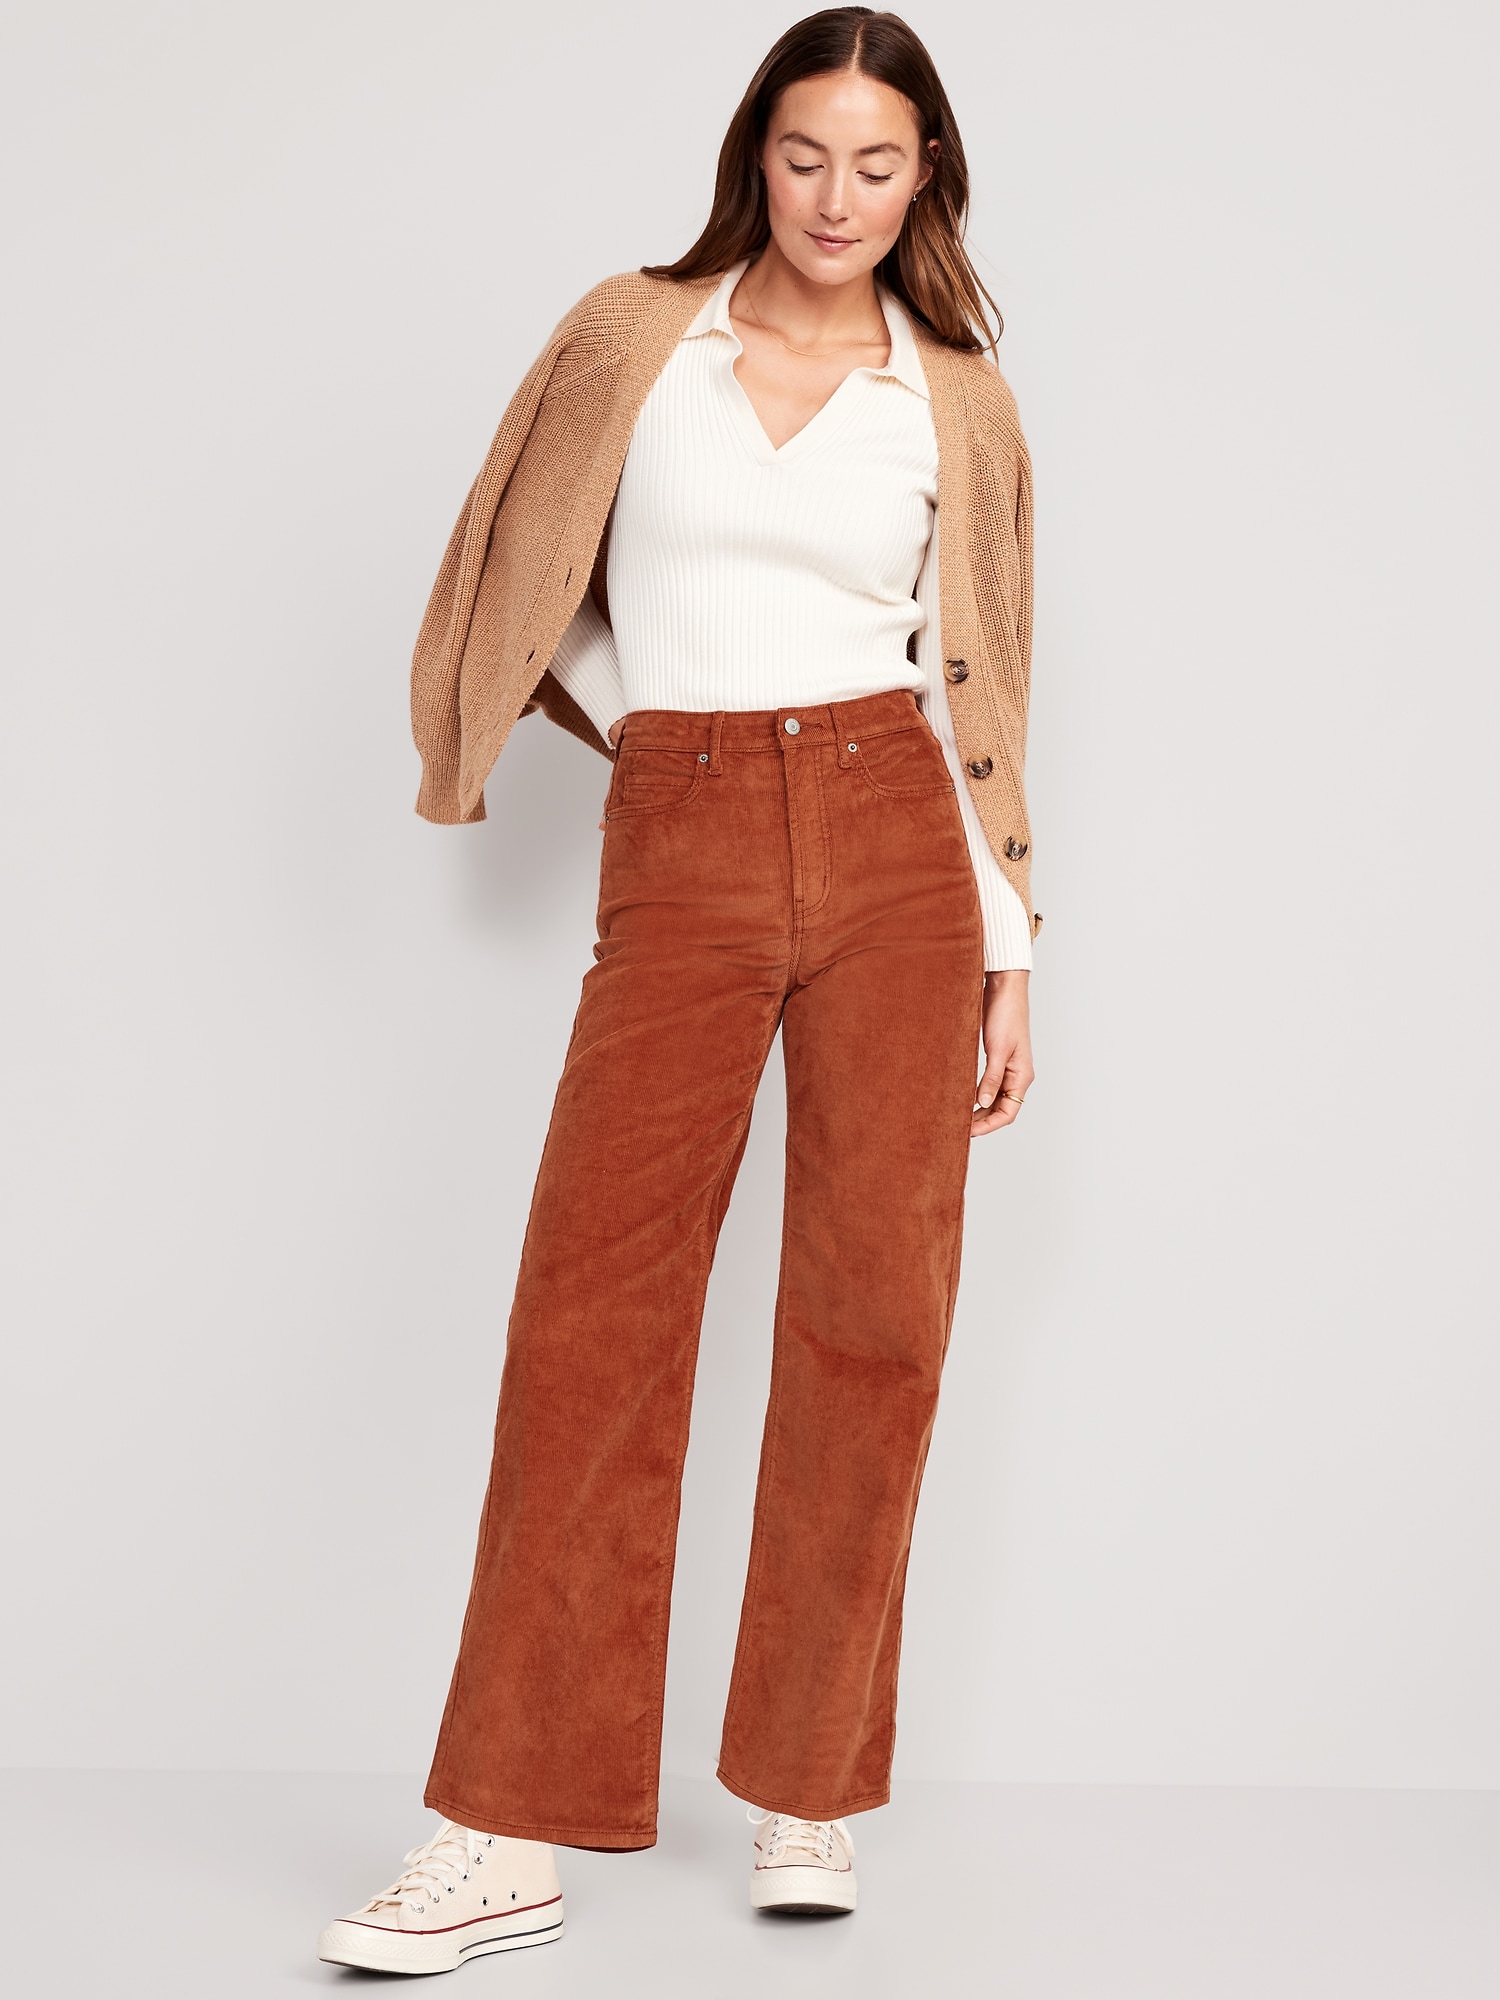 Buy Casual Brown Corduroy Pants for Women, Long Pants, Plus Size Pants,  Women's Baggy Pants, Autumn Winter Corduroy Harem Pants C2426 Online in  India - Etsy